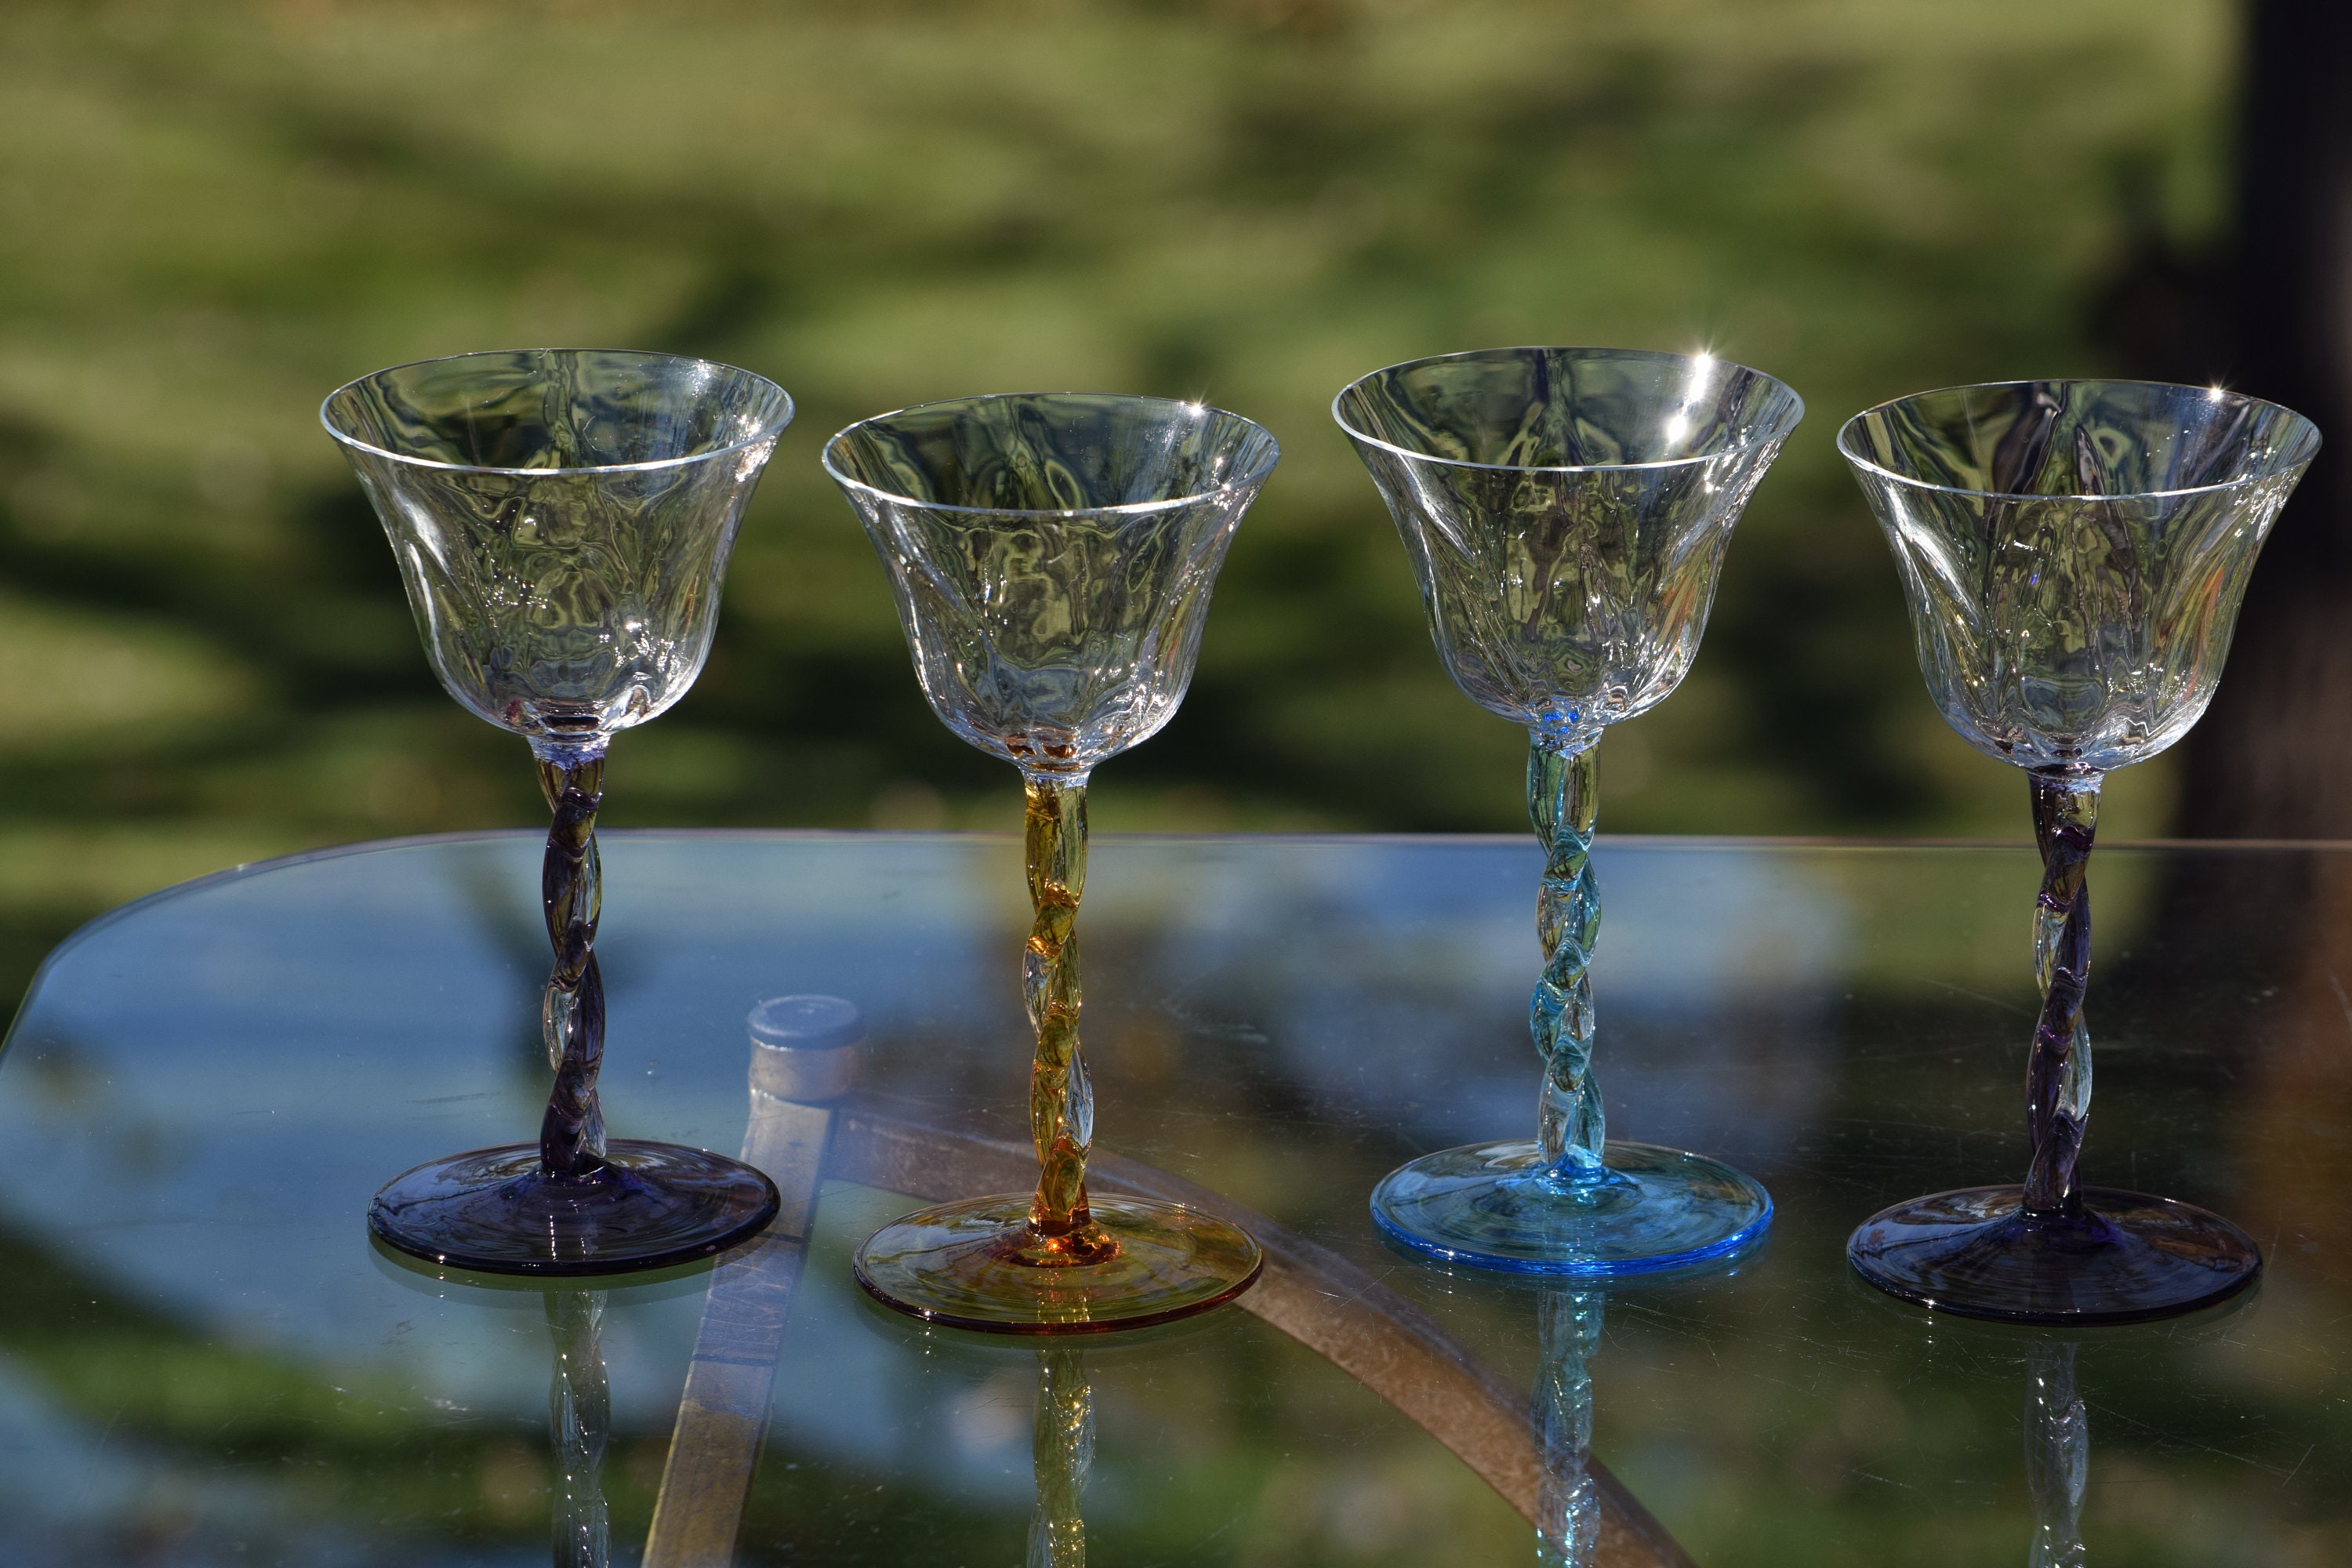 Vintage Multi Colored Twisted Stem Wine Glasses Set of 4, 4 oz Wine Glasses,  Vintage 4 oz Cocktail Glasses, Unique Wine Glasses